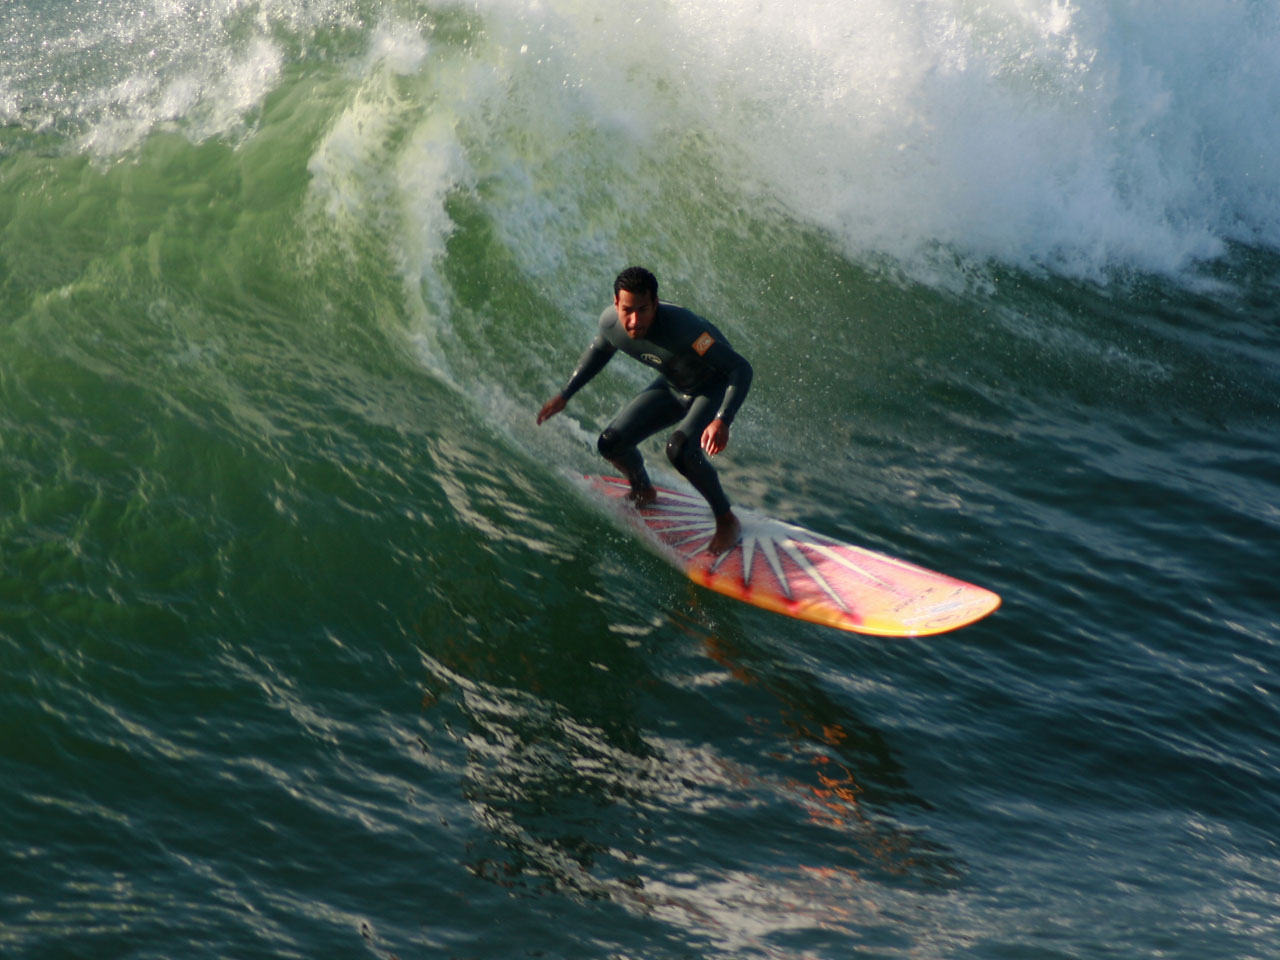 Longboard surfer druppels in op een wave